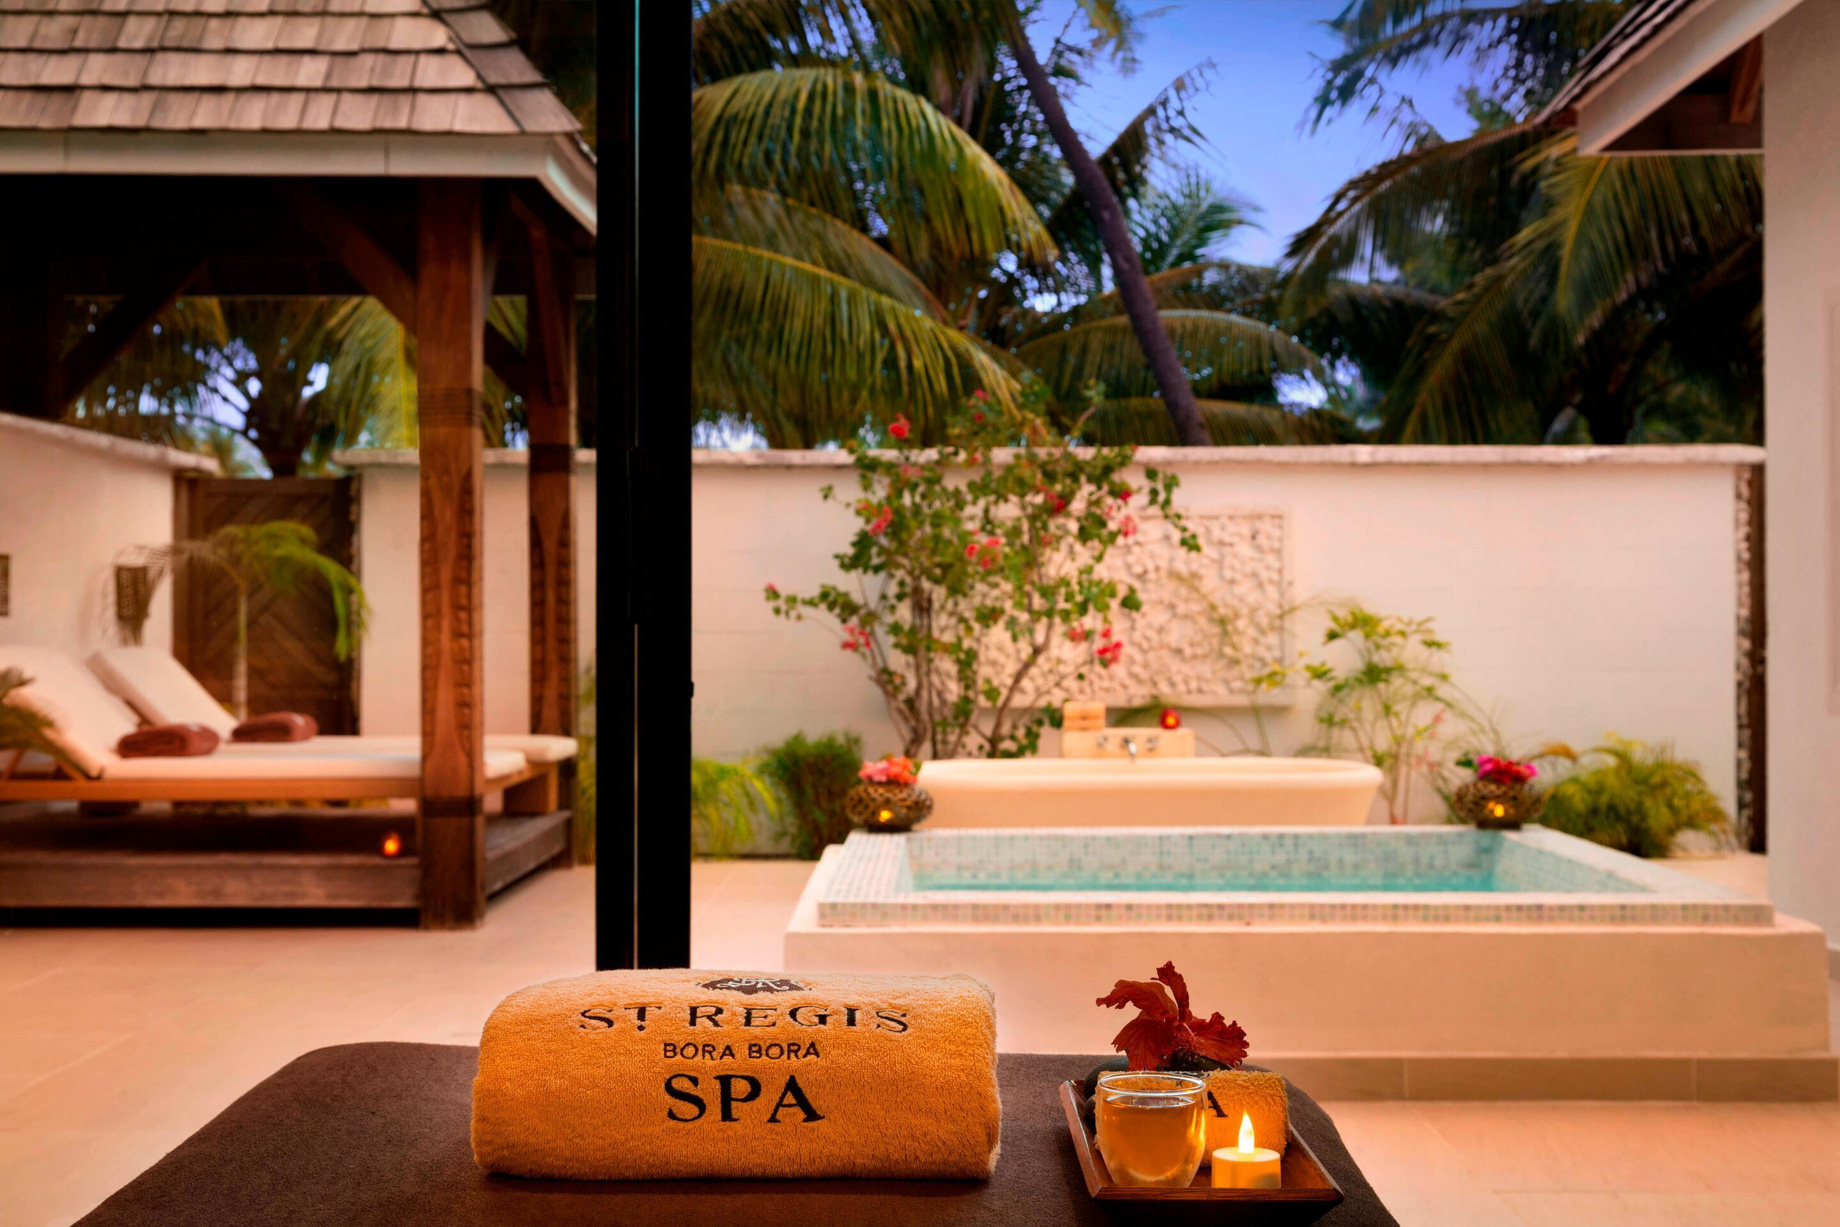 The St. Regis Bora Bora Resort - Bora Bora, French Polynesia - Iridium Spa Lounge Area